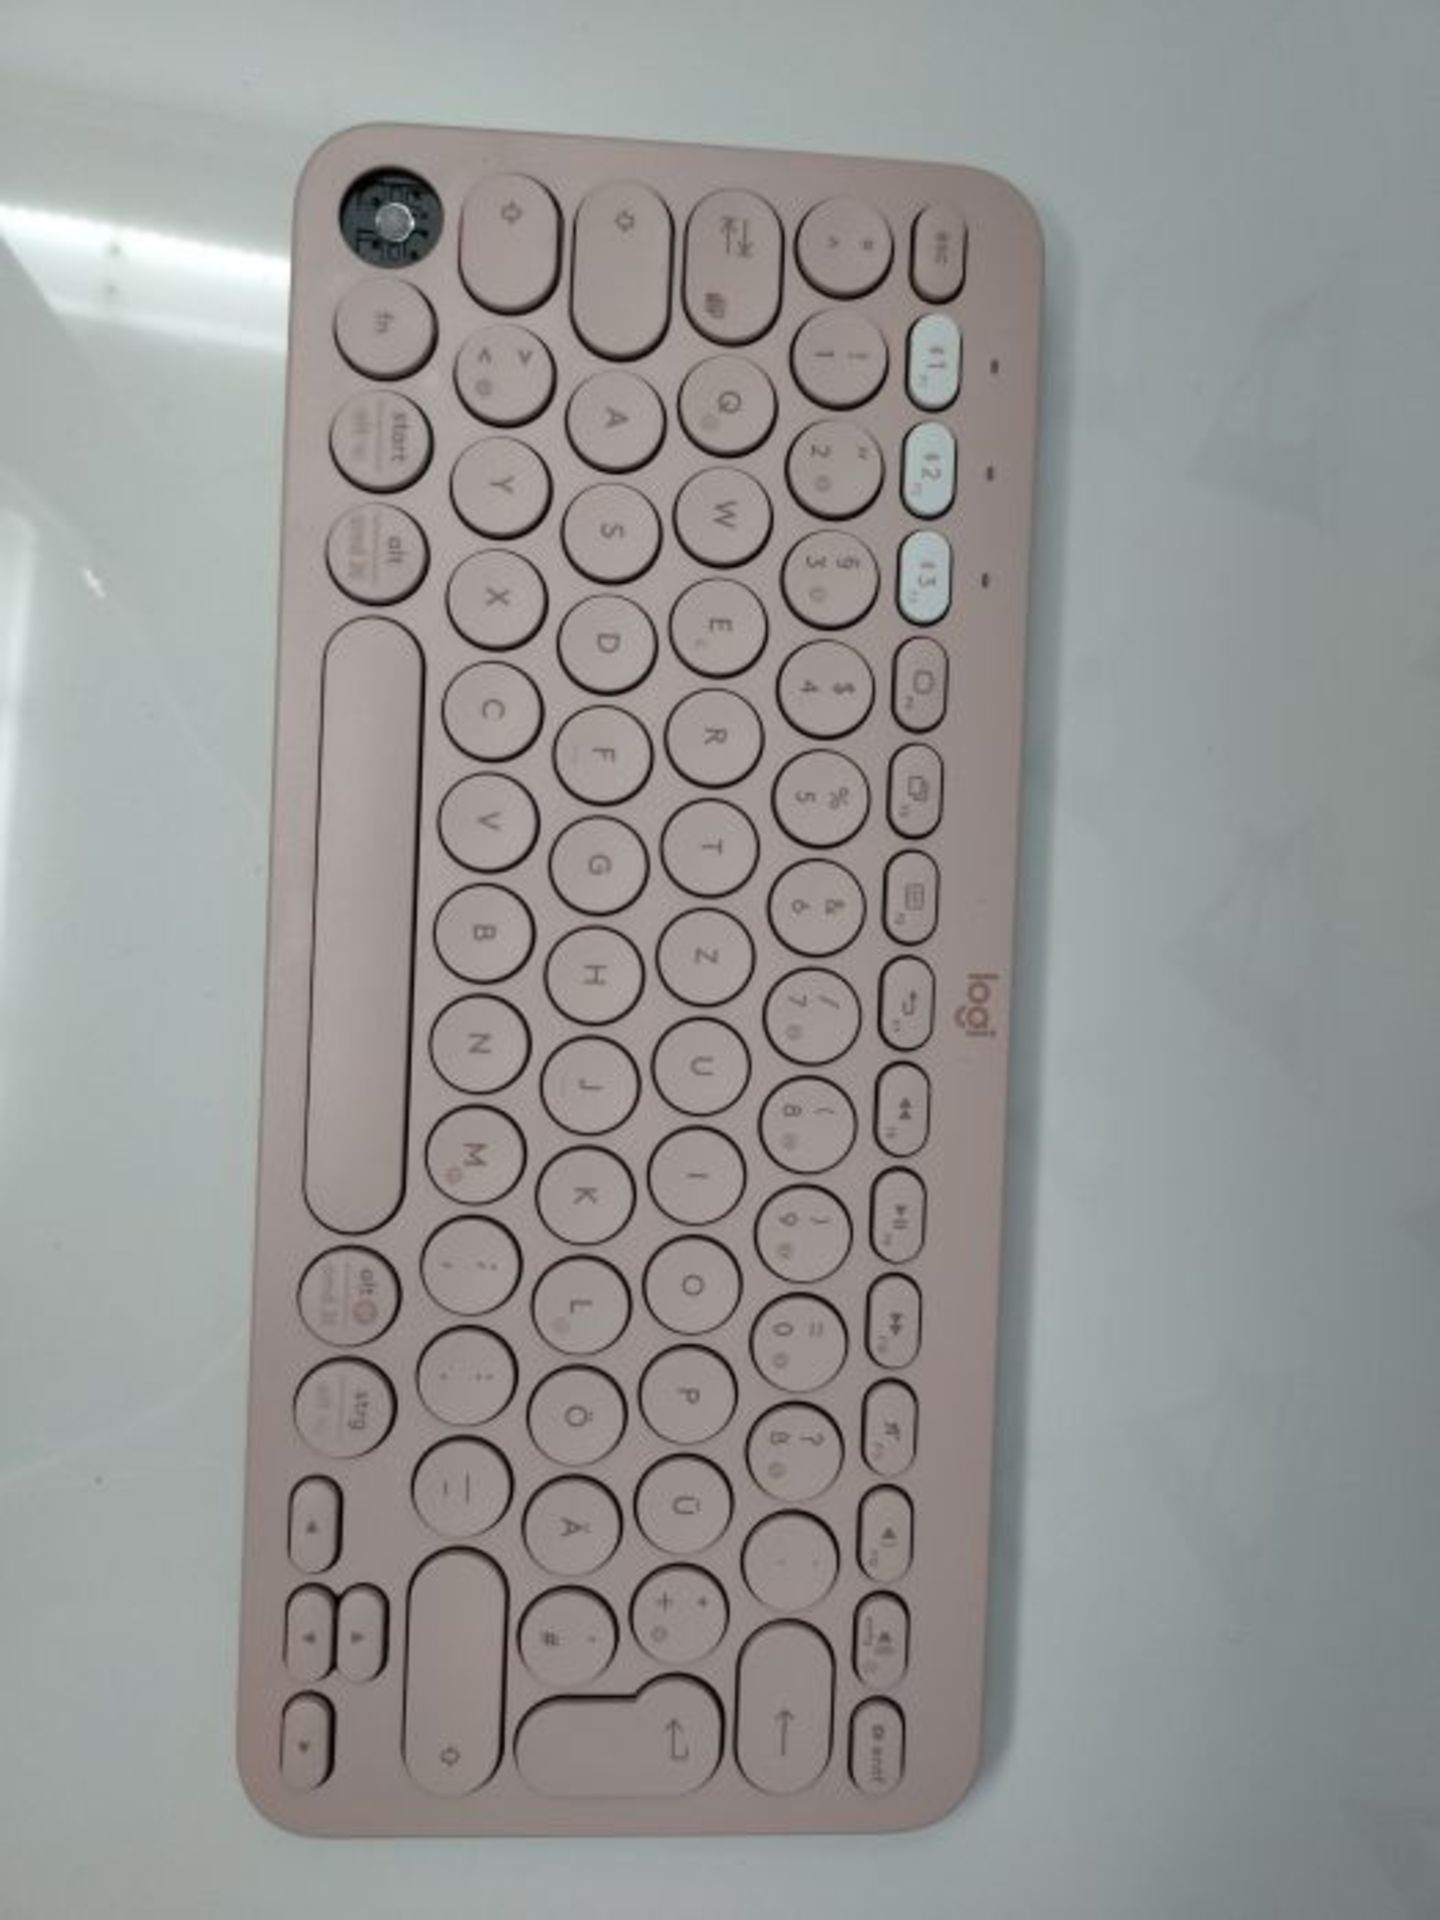 Logitech K380 Multi-Device Bluetooth Keyboard, QWERTZ German Layout - Pink - Image 3 of 3